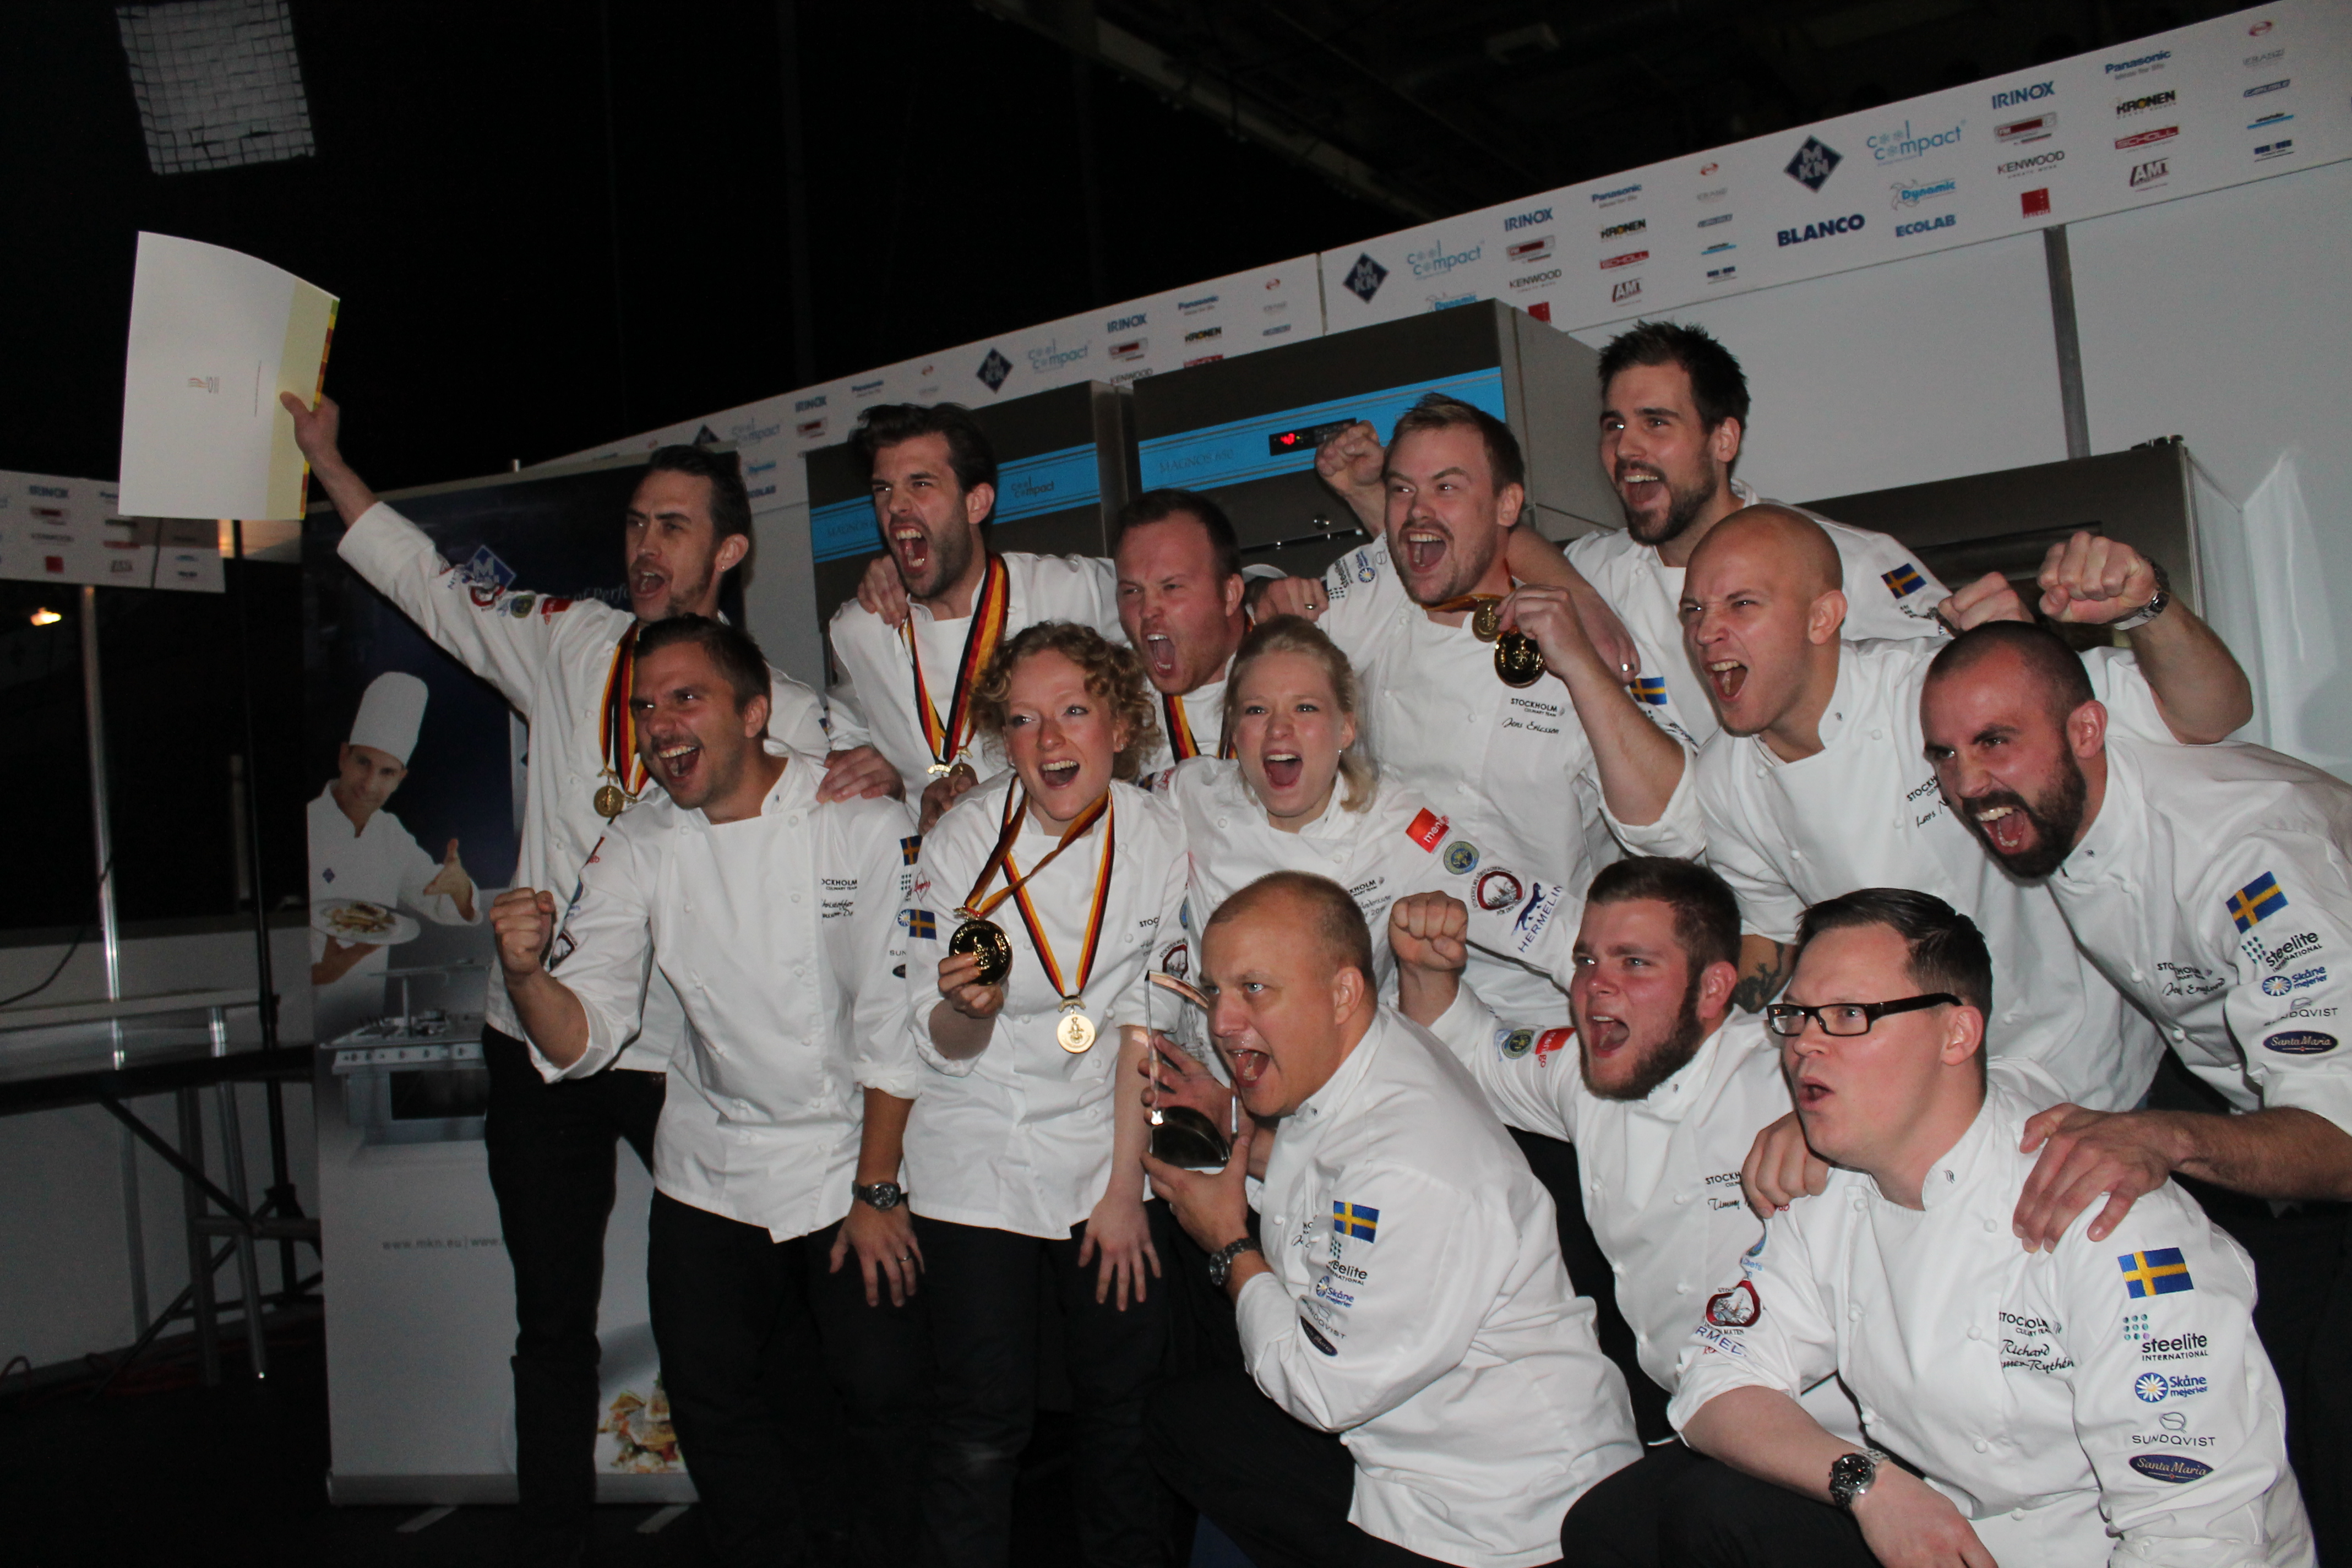 Stockholm Regional Culinary Team Olympic Champions